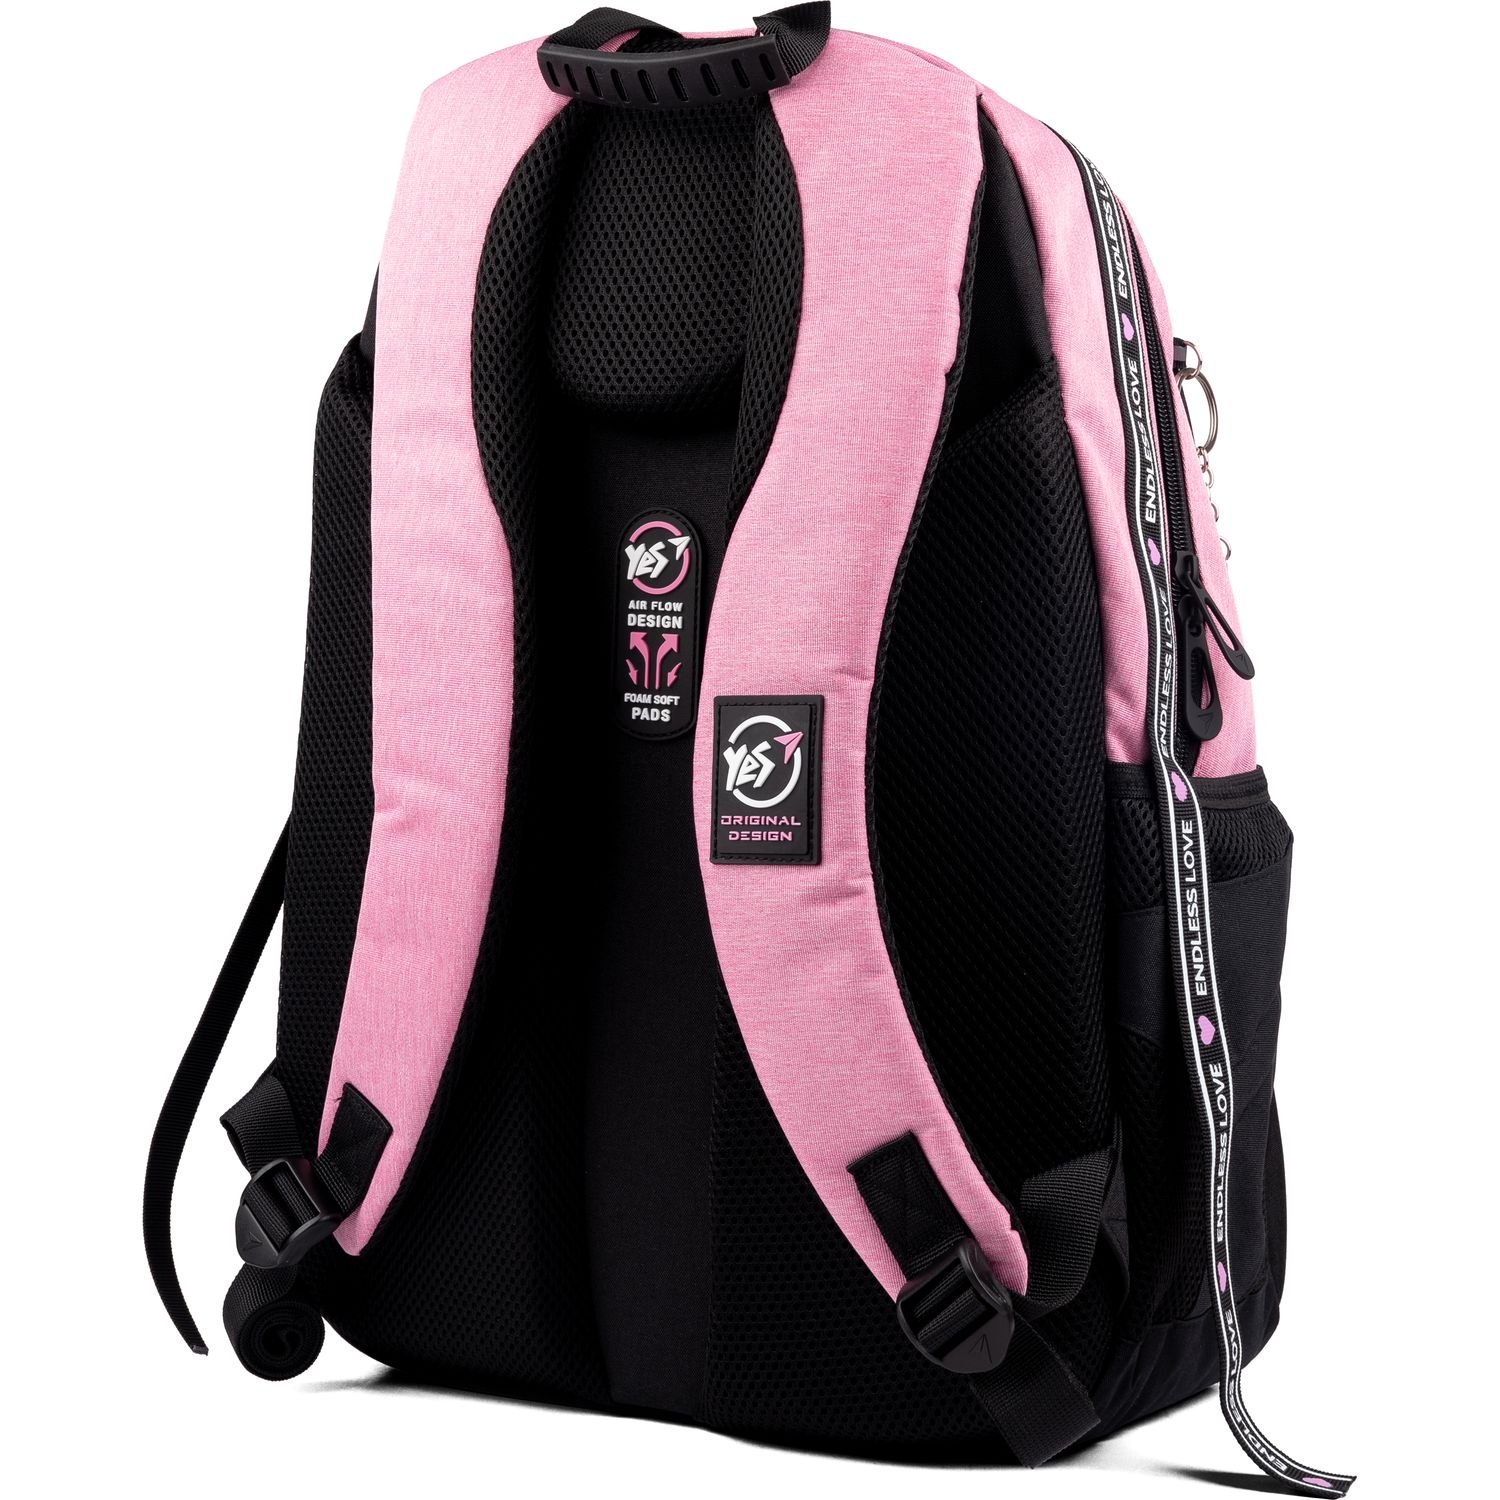 Рюкзак Yes TS-61 Girl Wonderful, черный с розовым (558908) - фото 3